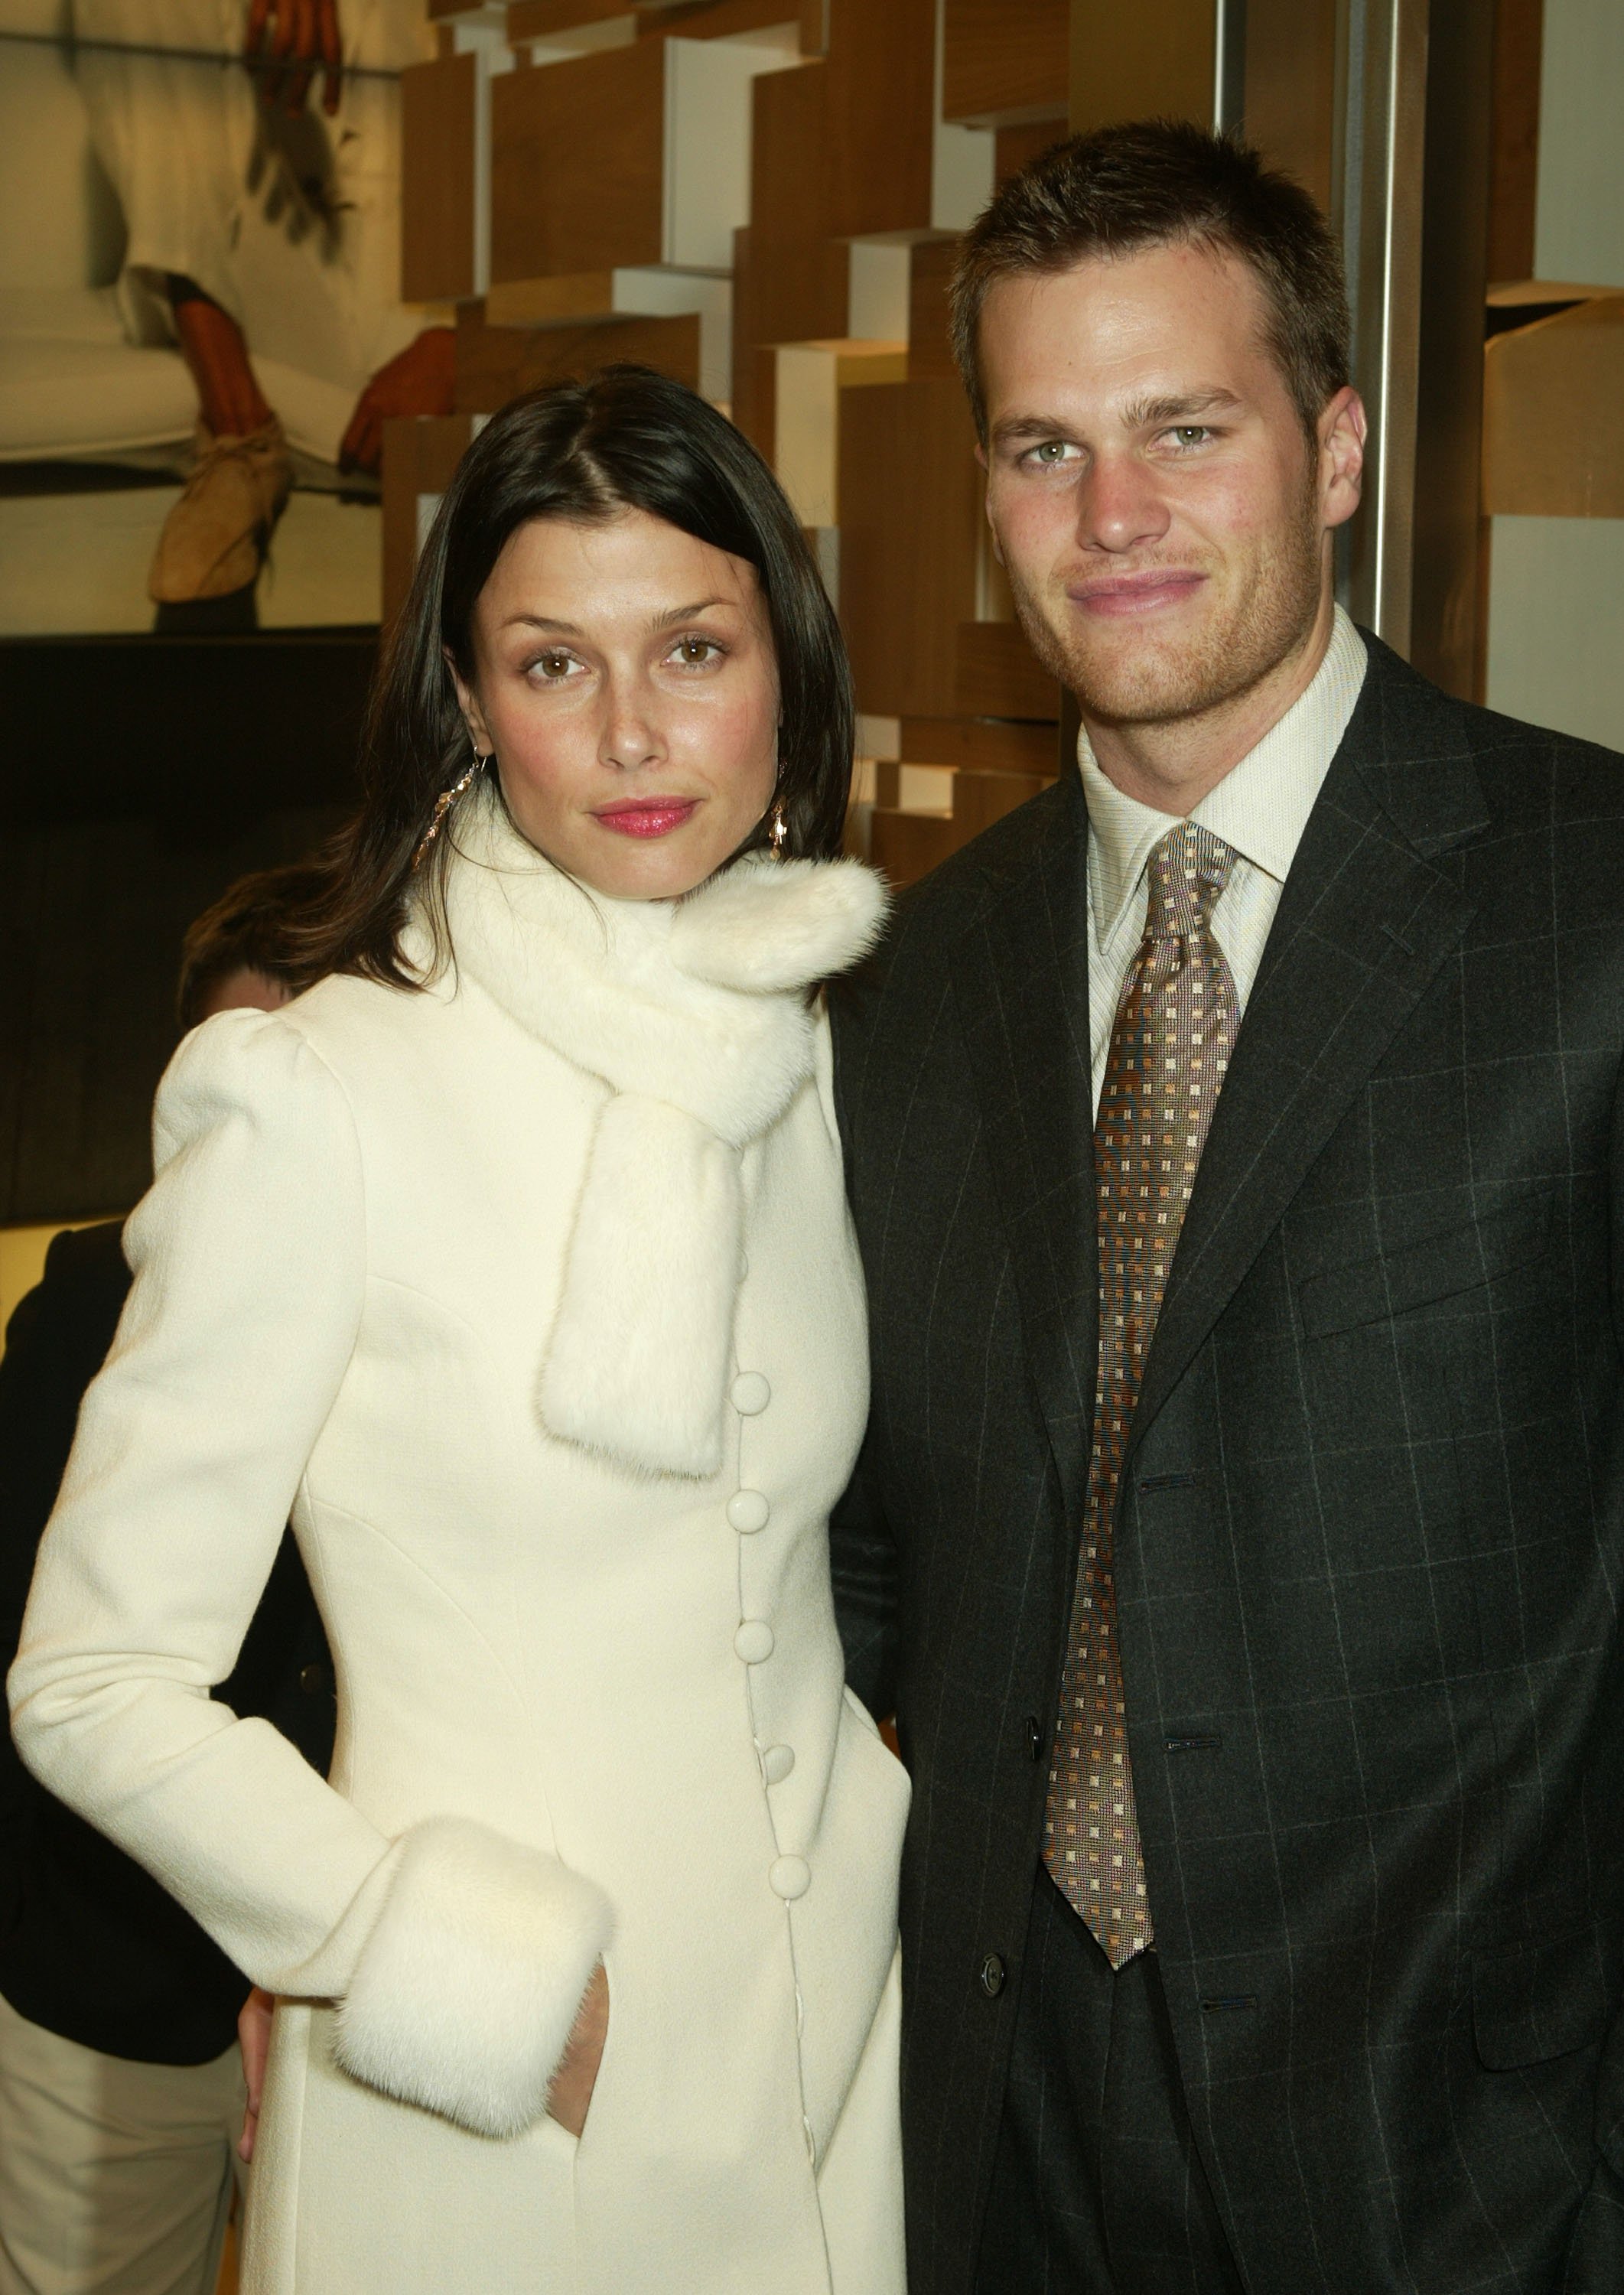 Bridget Moynahan and Tom Brady at Ermenegildo Zegna Flagship store on April 13, 2004 in New York City | Photo: Getty Images